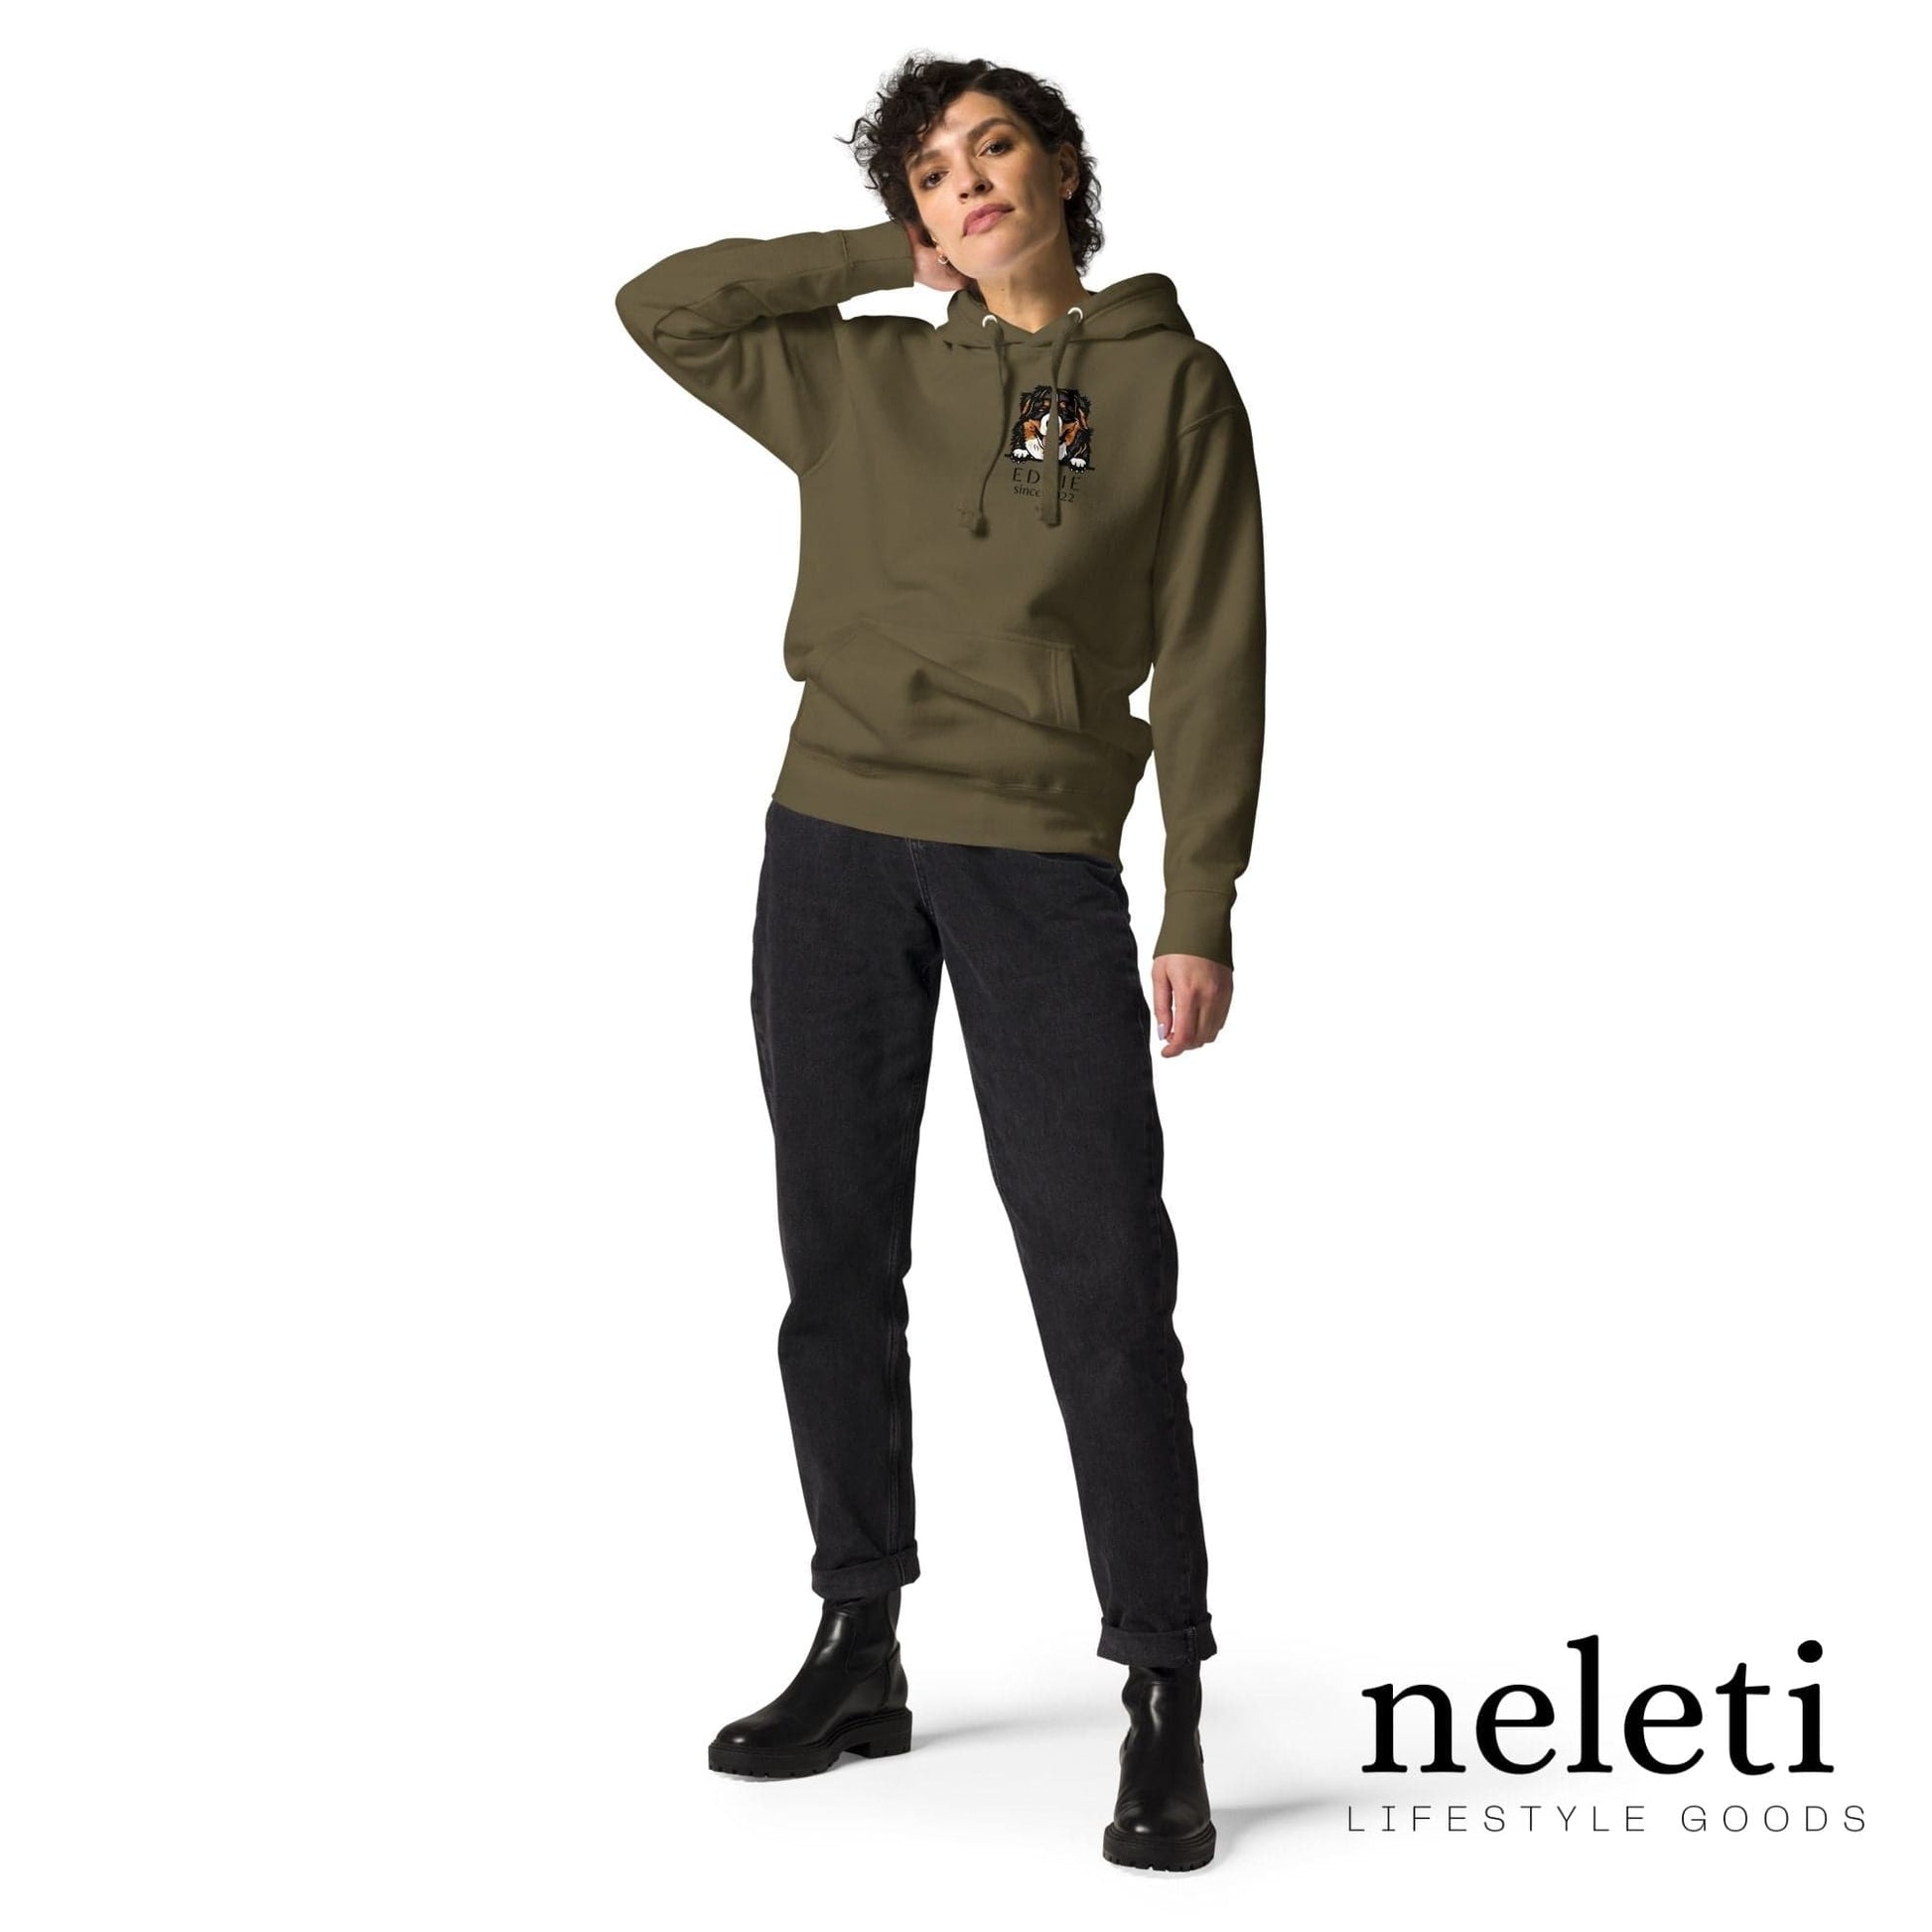 neleti.com-custom-military-green-hoodie-for-dog-lovers